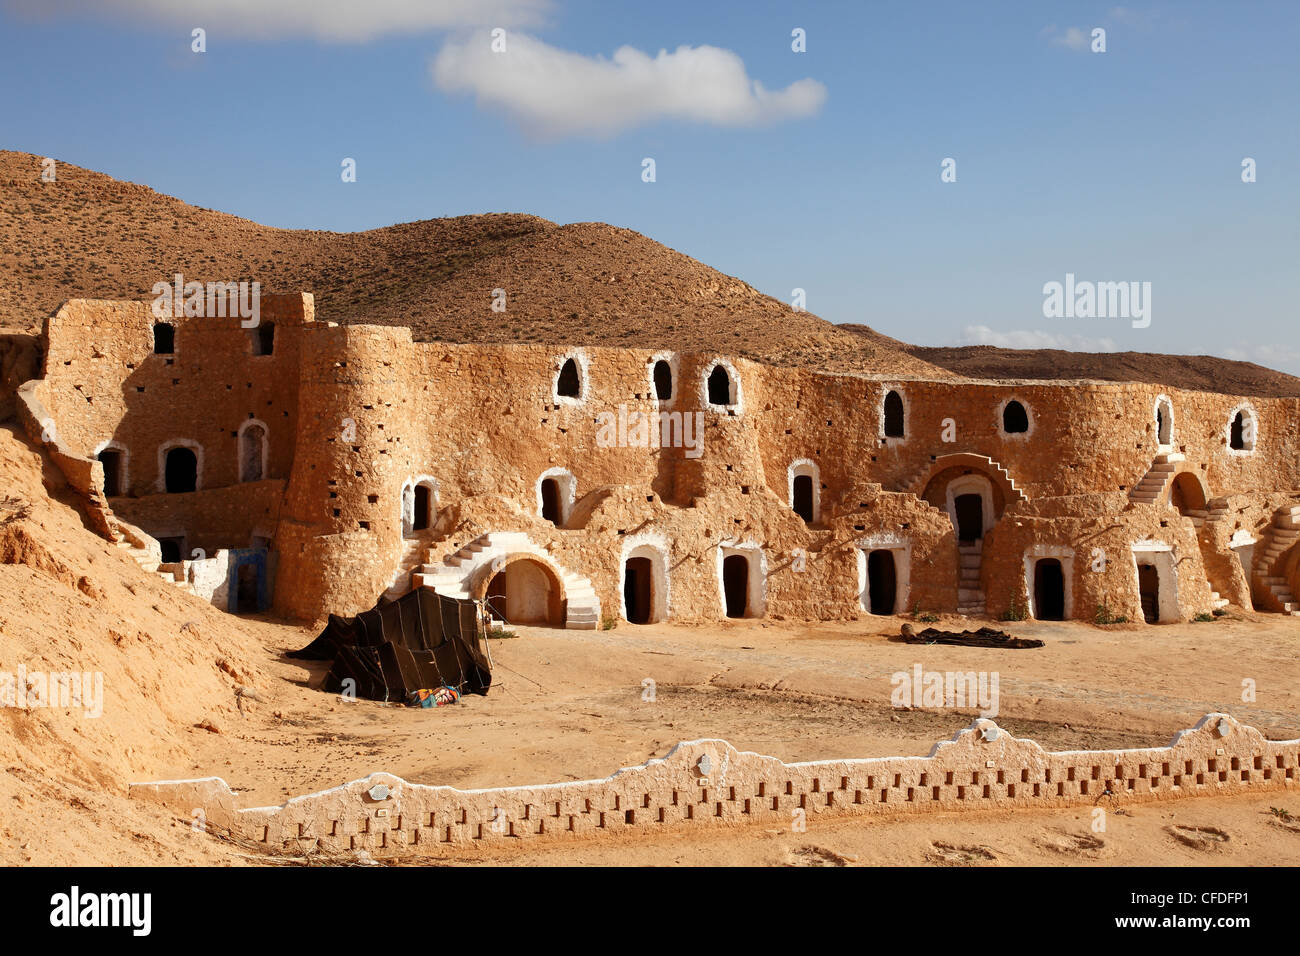 Diaramor Museum in troglodyte dwelling style building, Matmata, Tunisia, North Africa, Africa Stock Photo